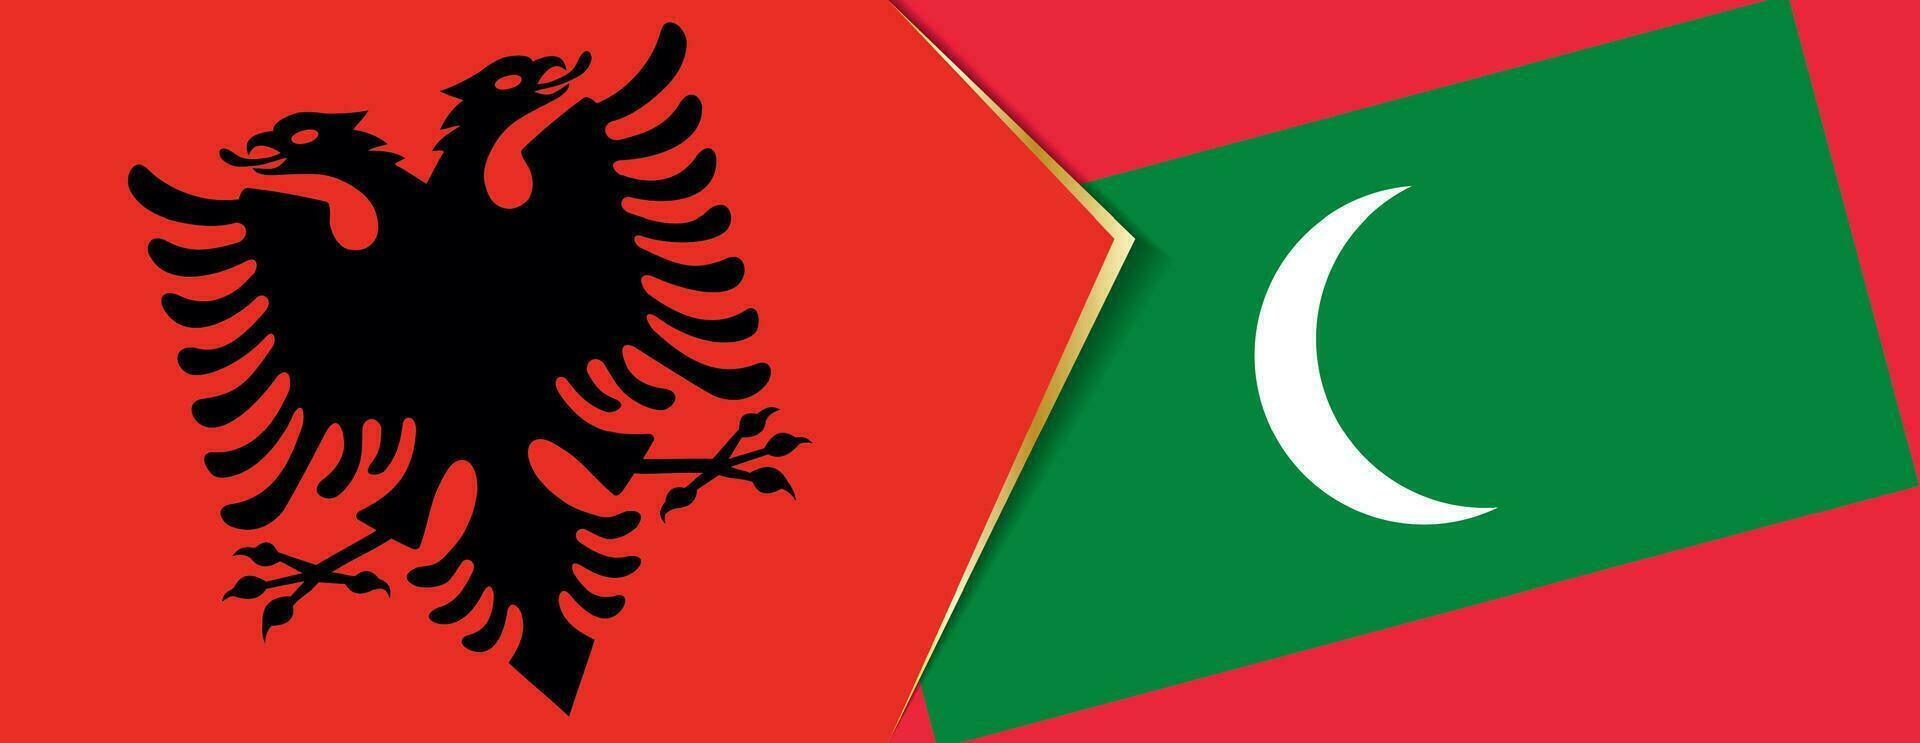 Albanien und Malediven Flaggen, zwei Vektor Flaggen.